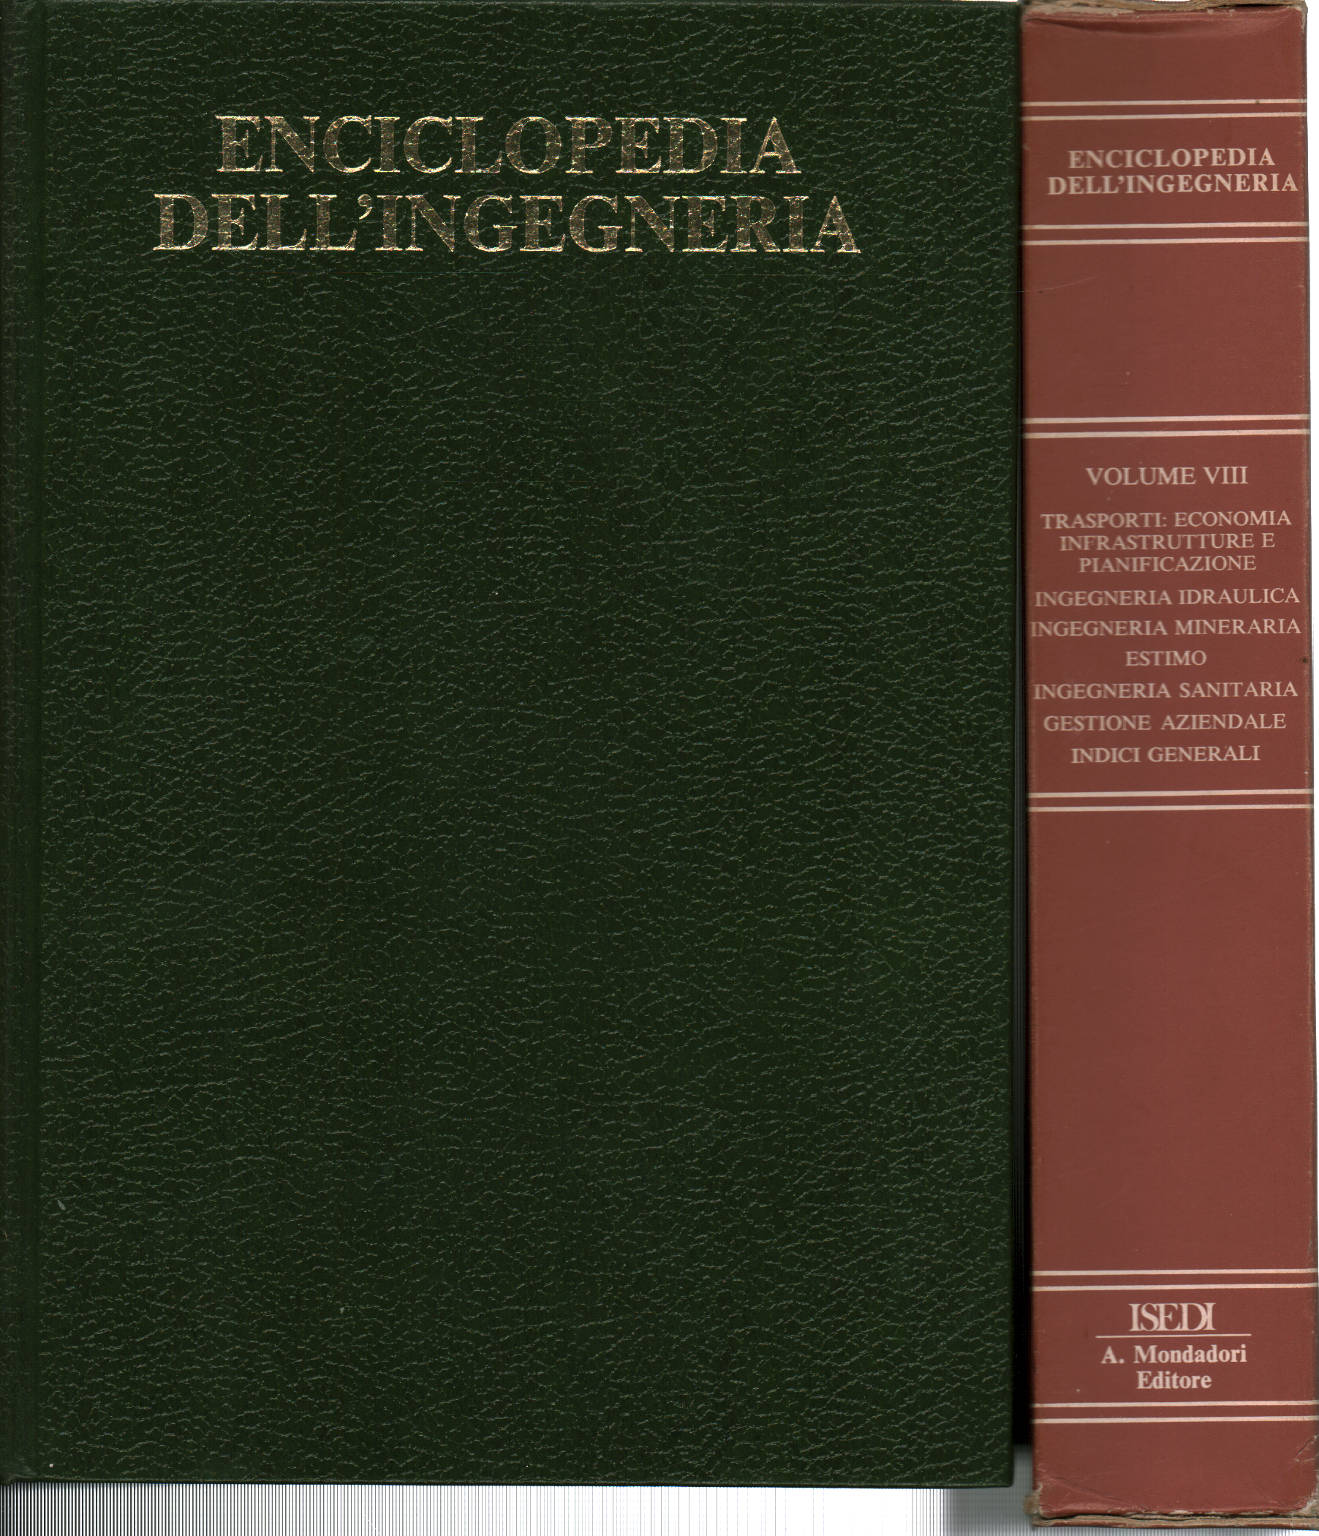 Encyclopedia of Engineering. Volume VIII, Mario Lenti